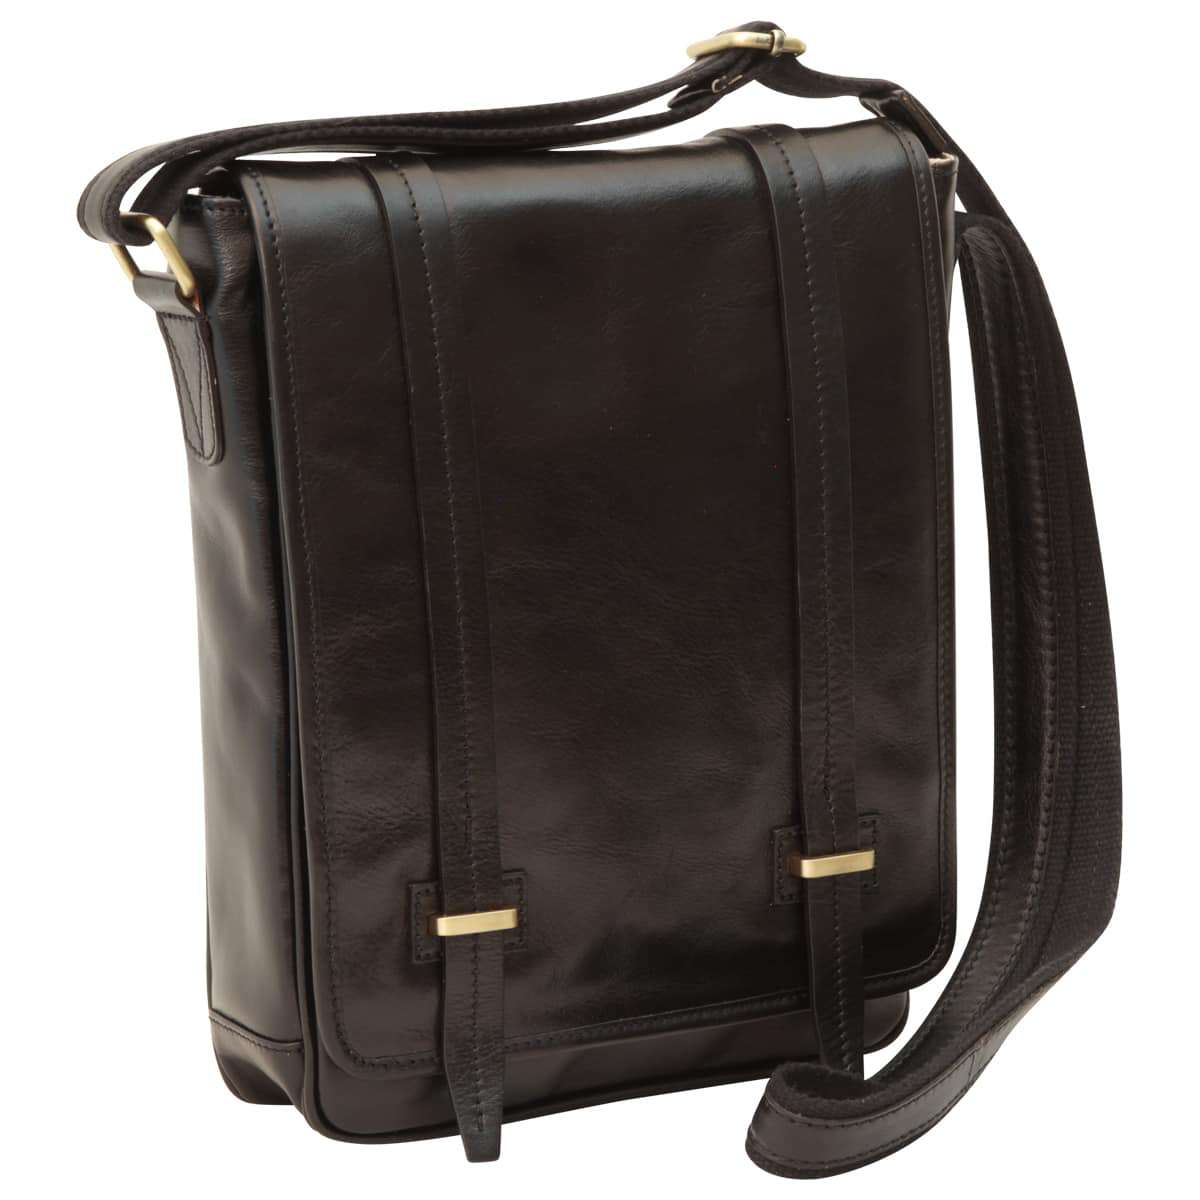 Medium leather bag with double magnetic closure - Black | 406589NE UK | Old Angler Firenze